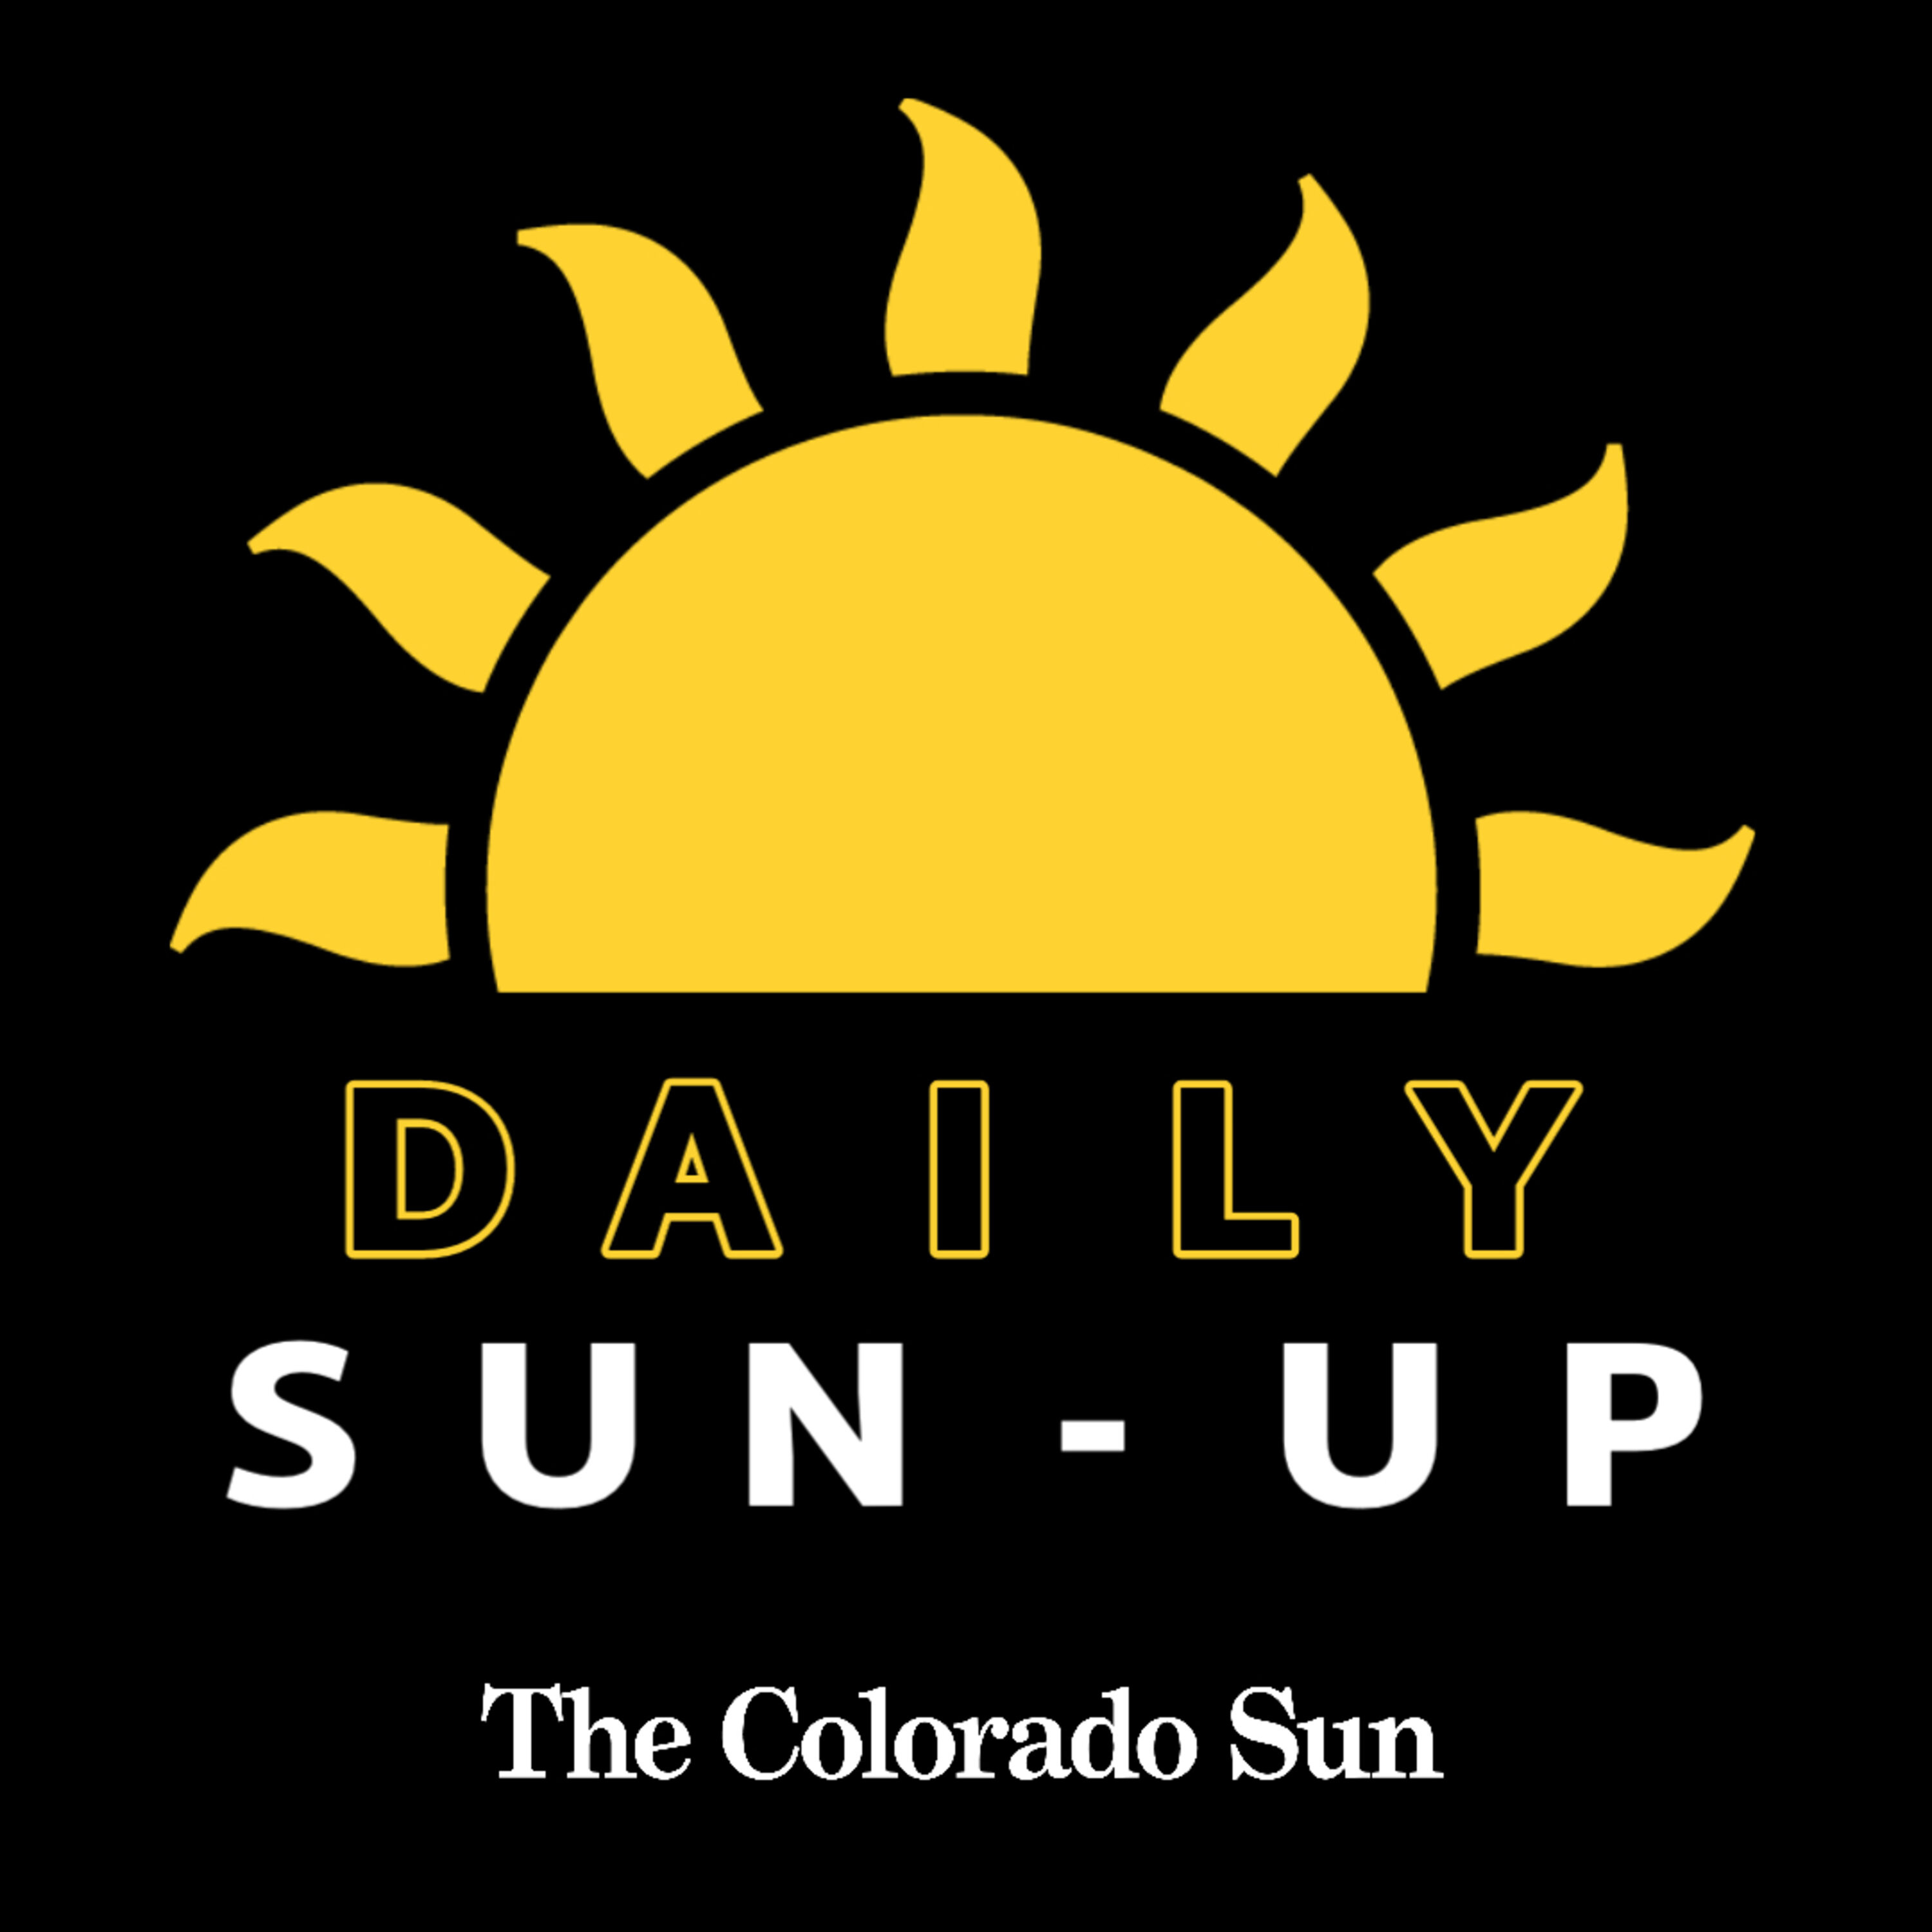 Despite tragic accident, Colorado backcountry mostly safe this season